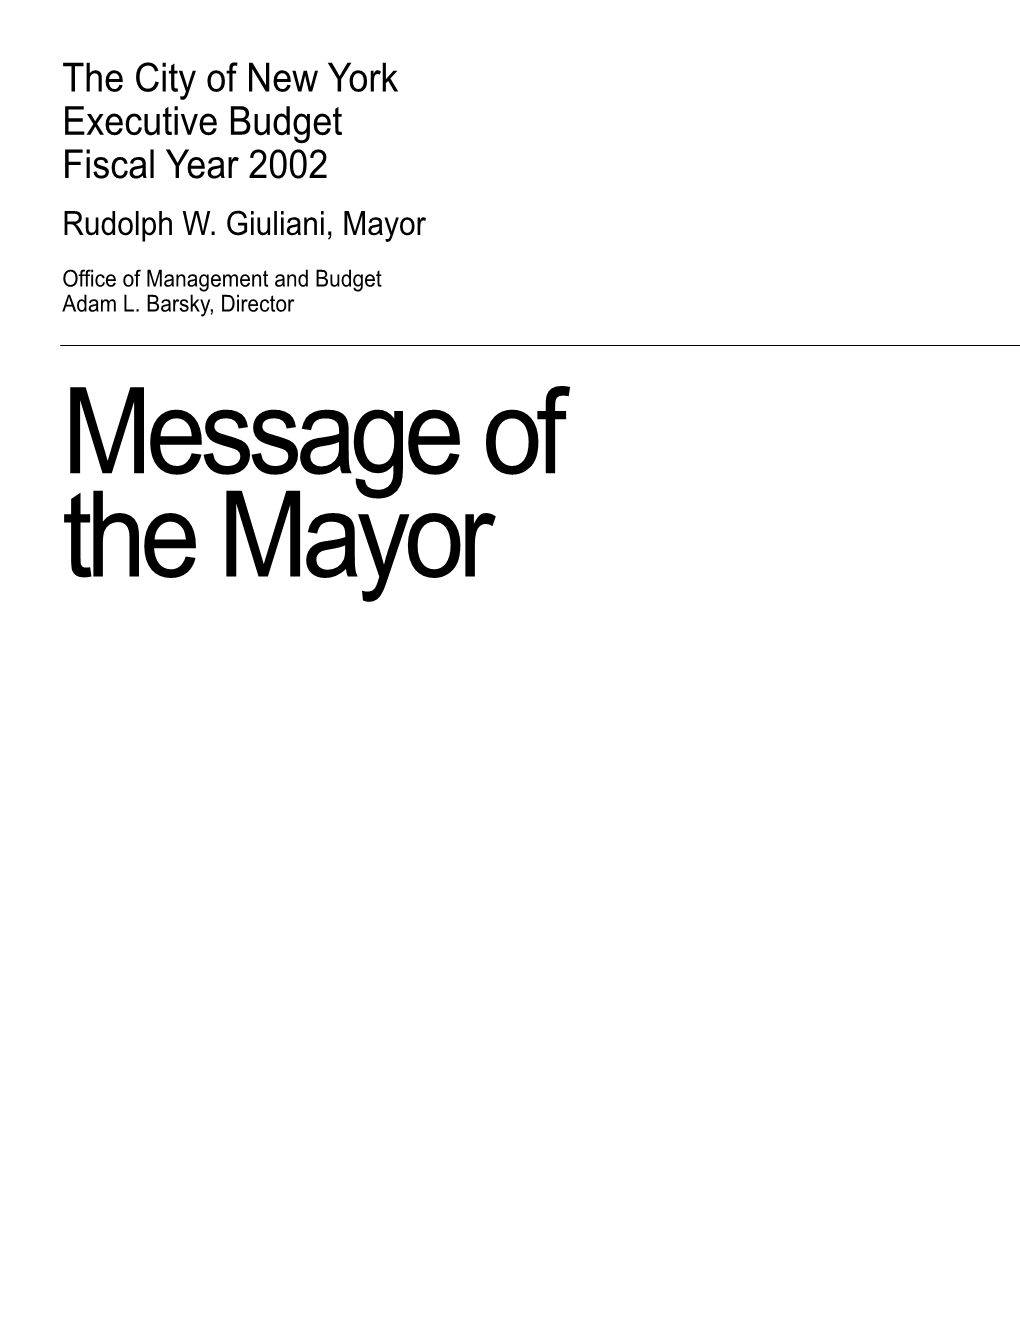 FY 2002 Executive Budget Mayor's Message